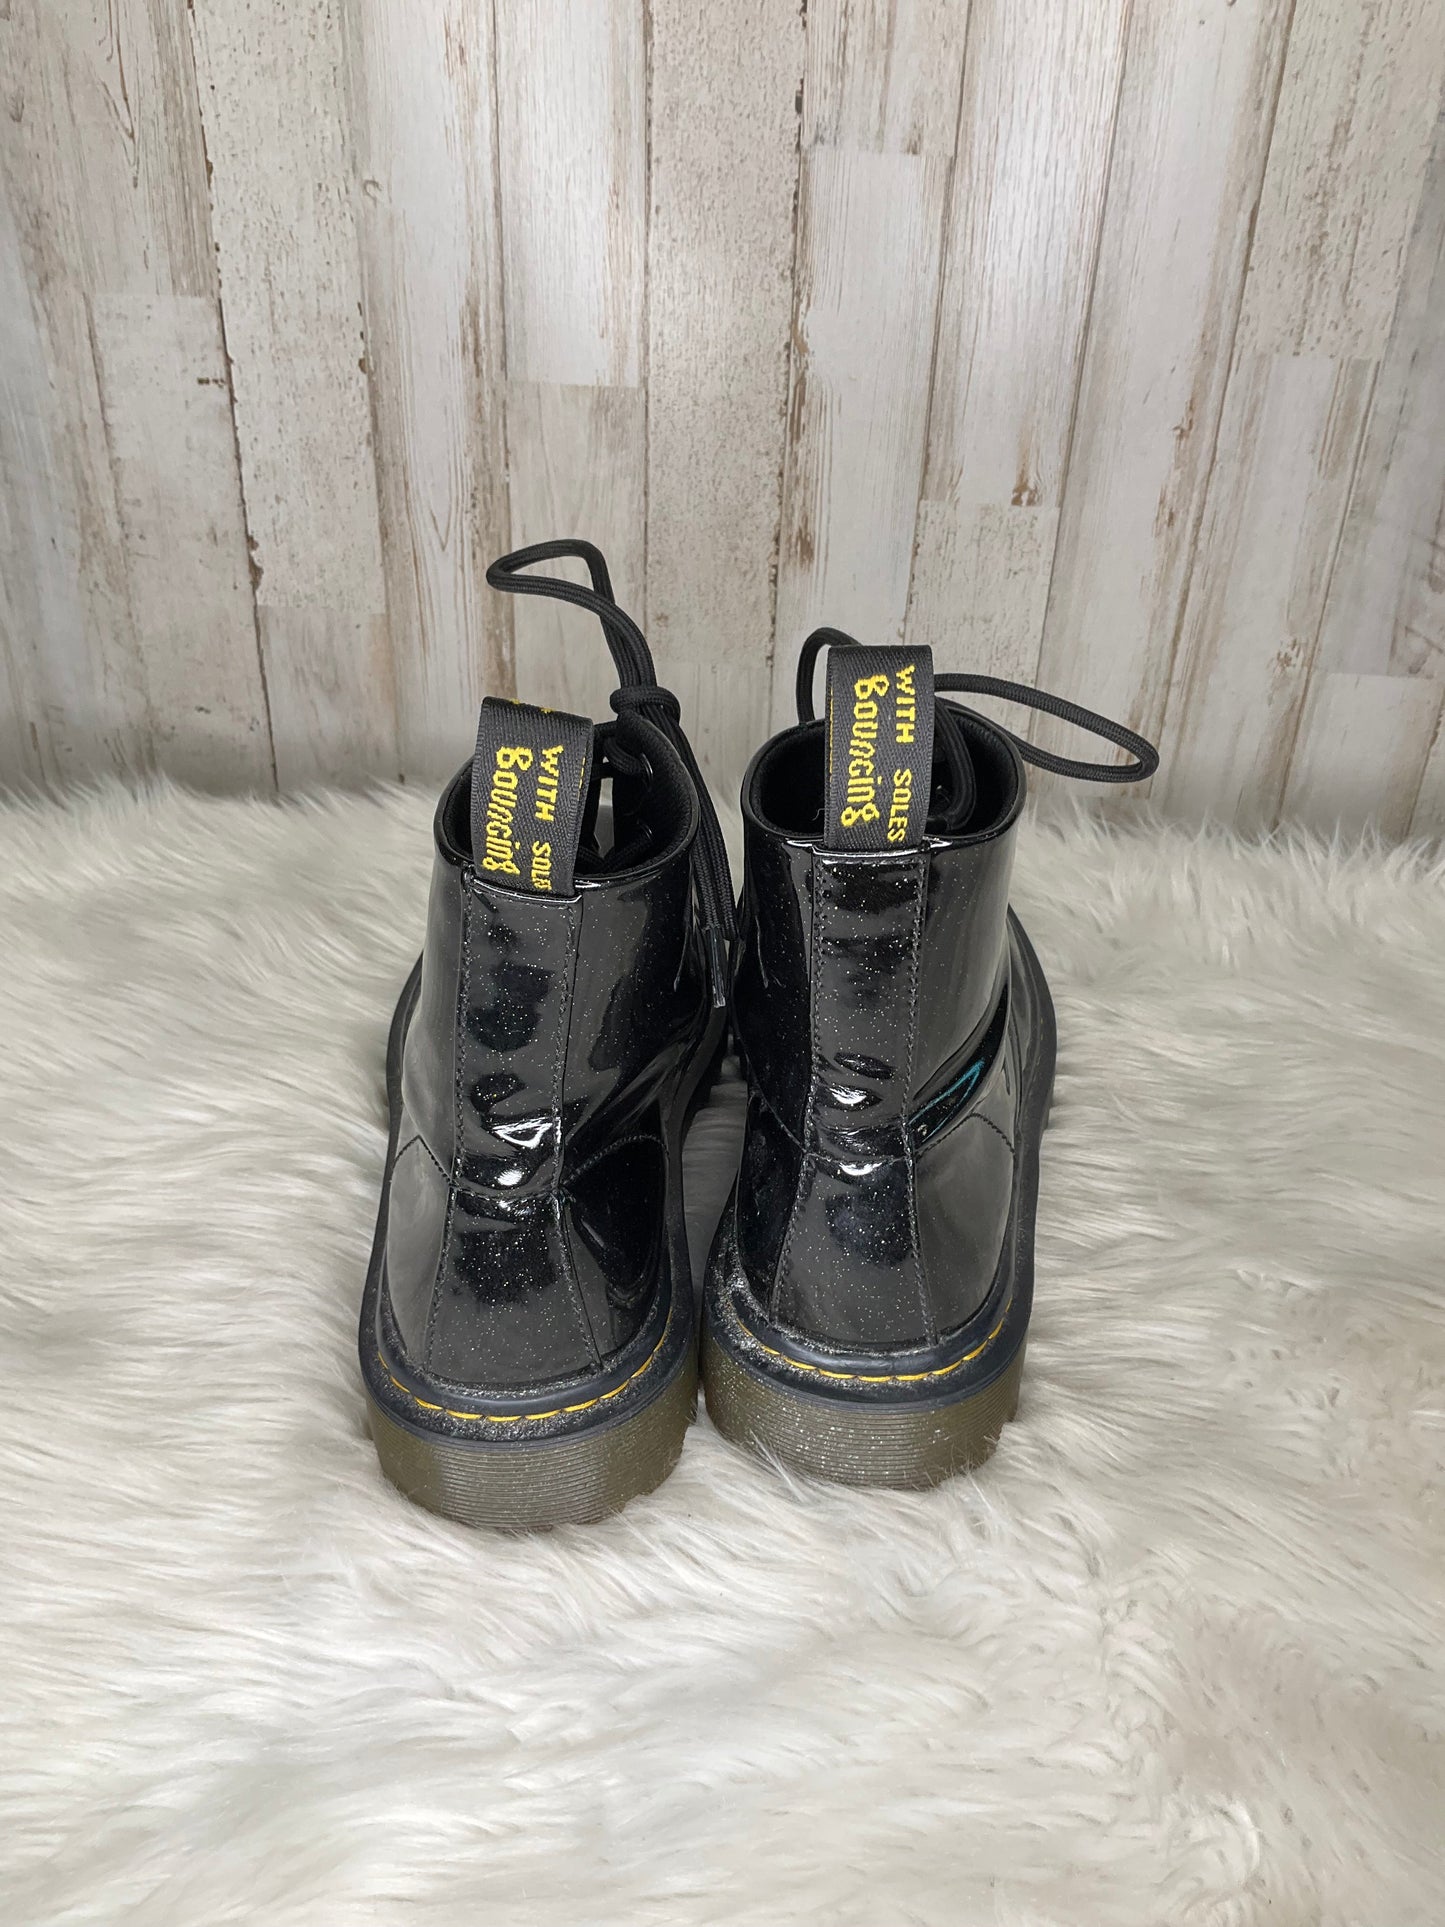 Black Boots Ankle Flats Dr Martens, Size 8